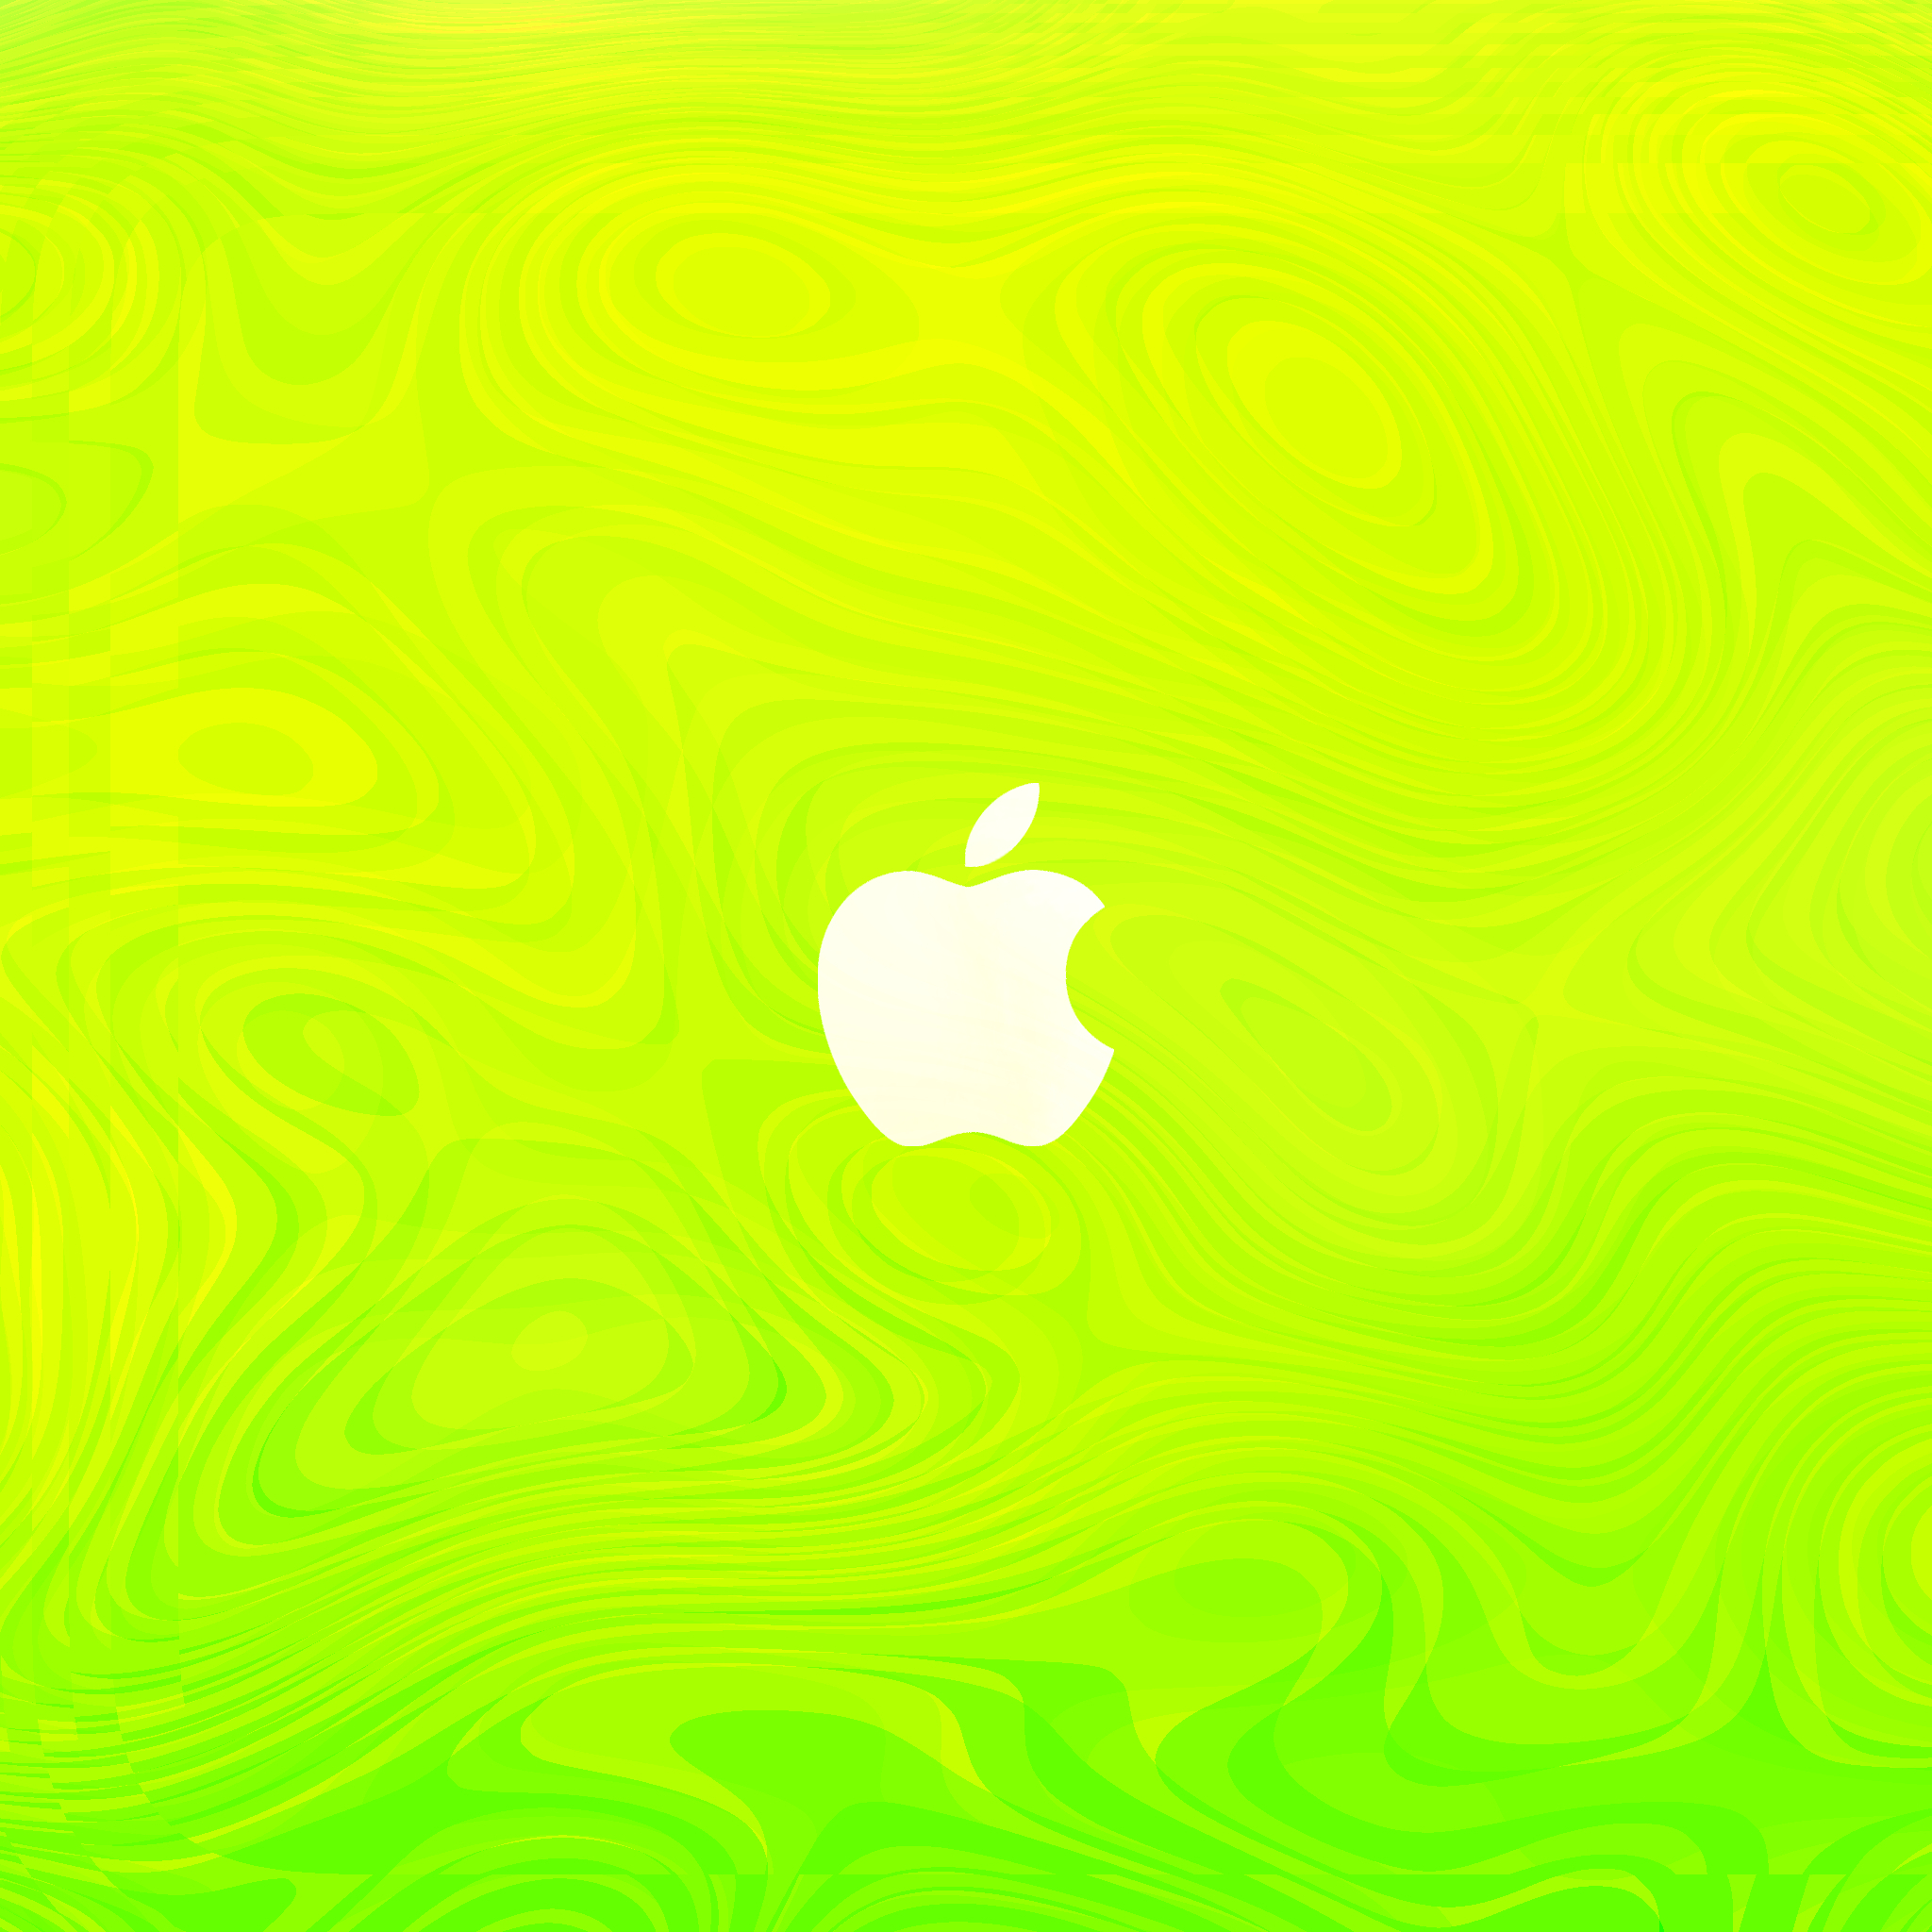 gallery apple filename ipad retina wallpaper apple logo hd 52 jpg